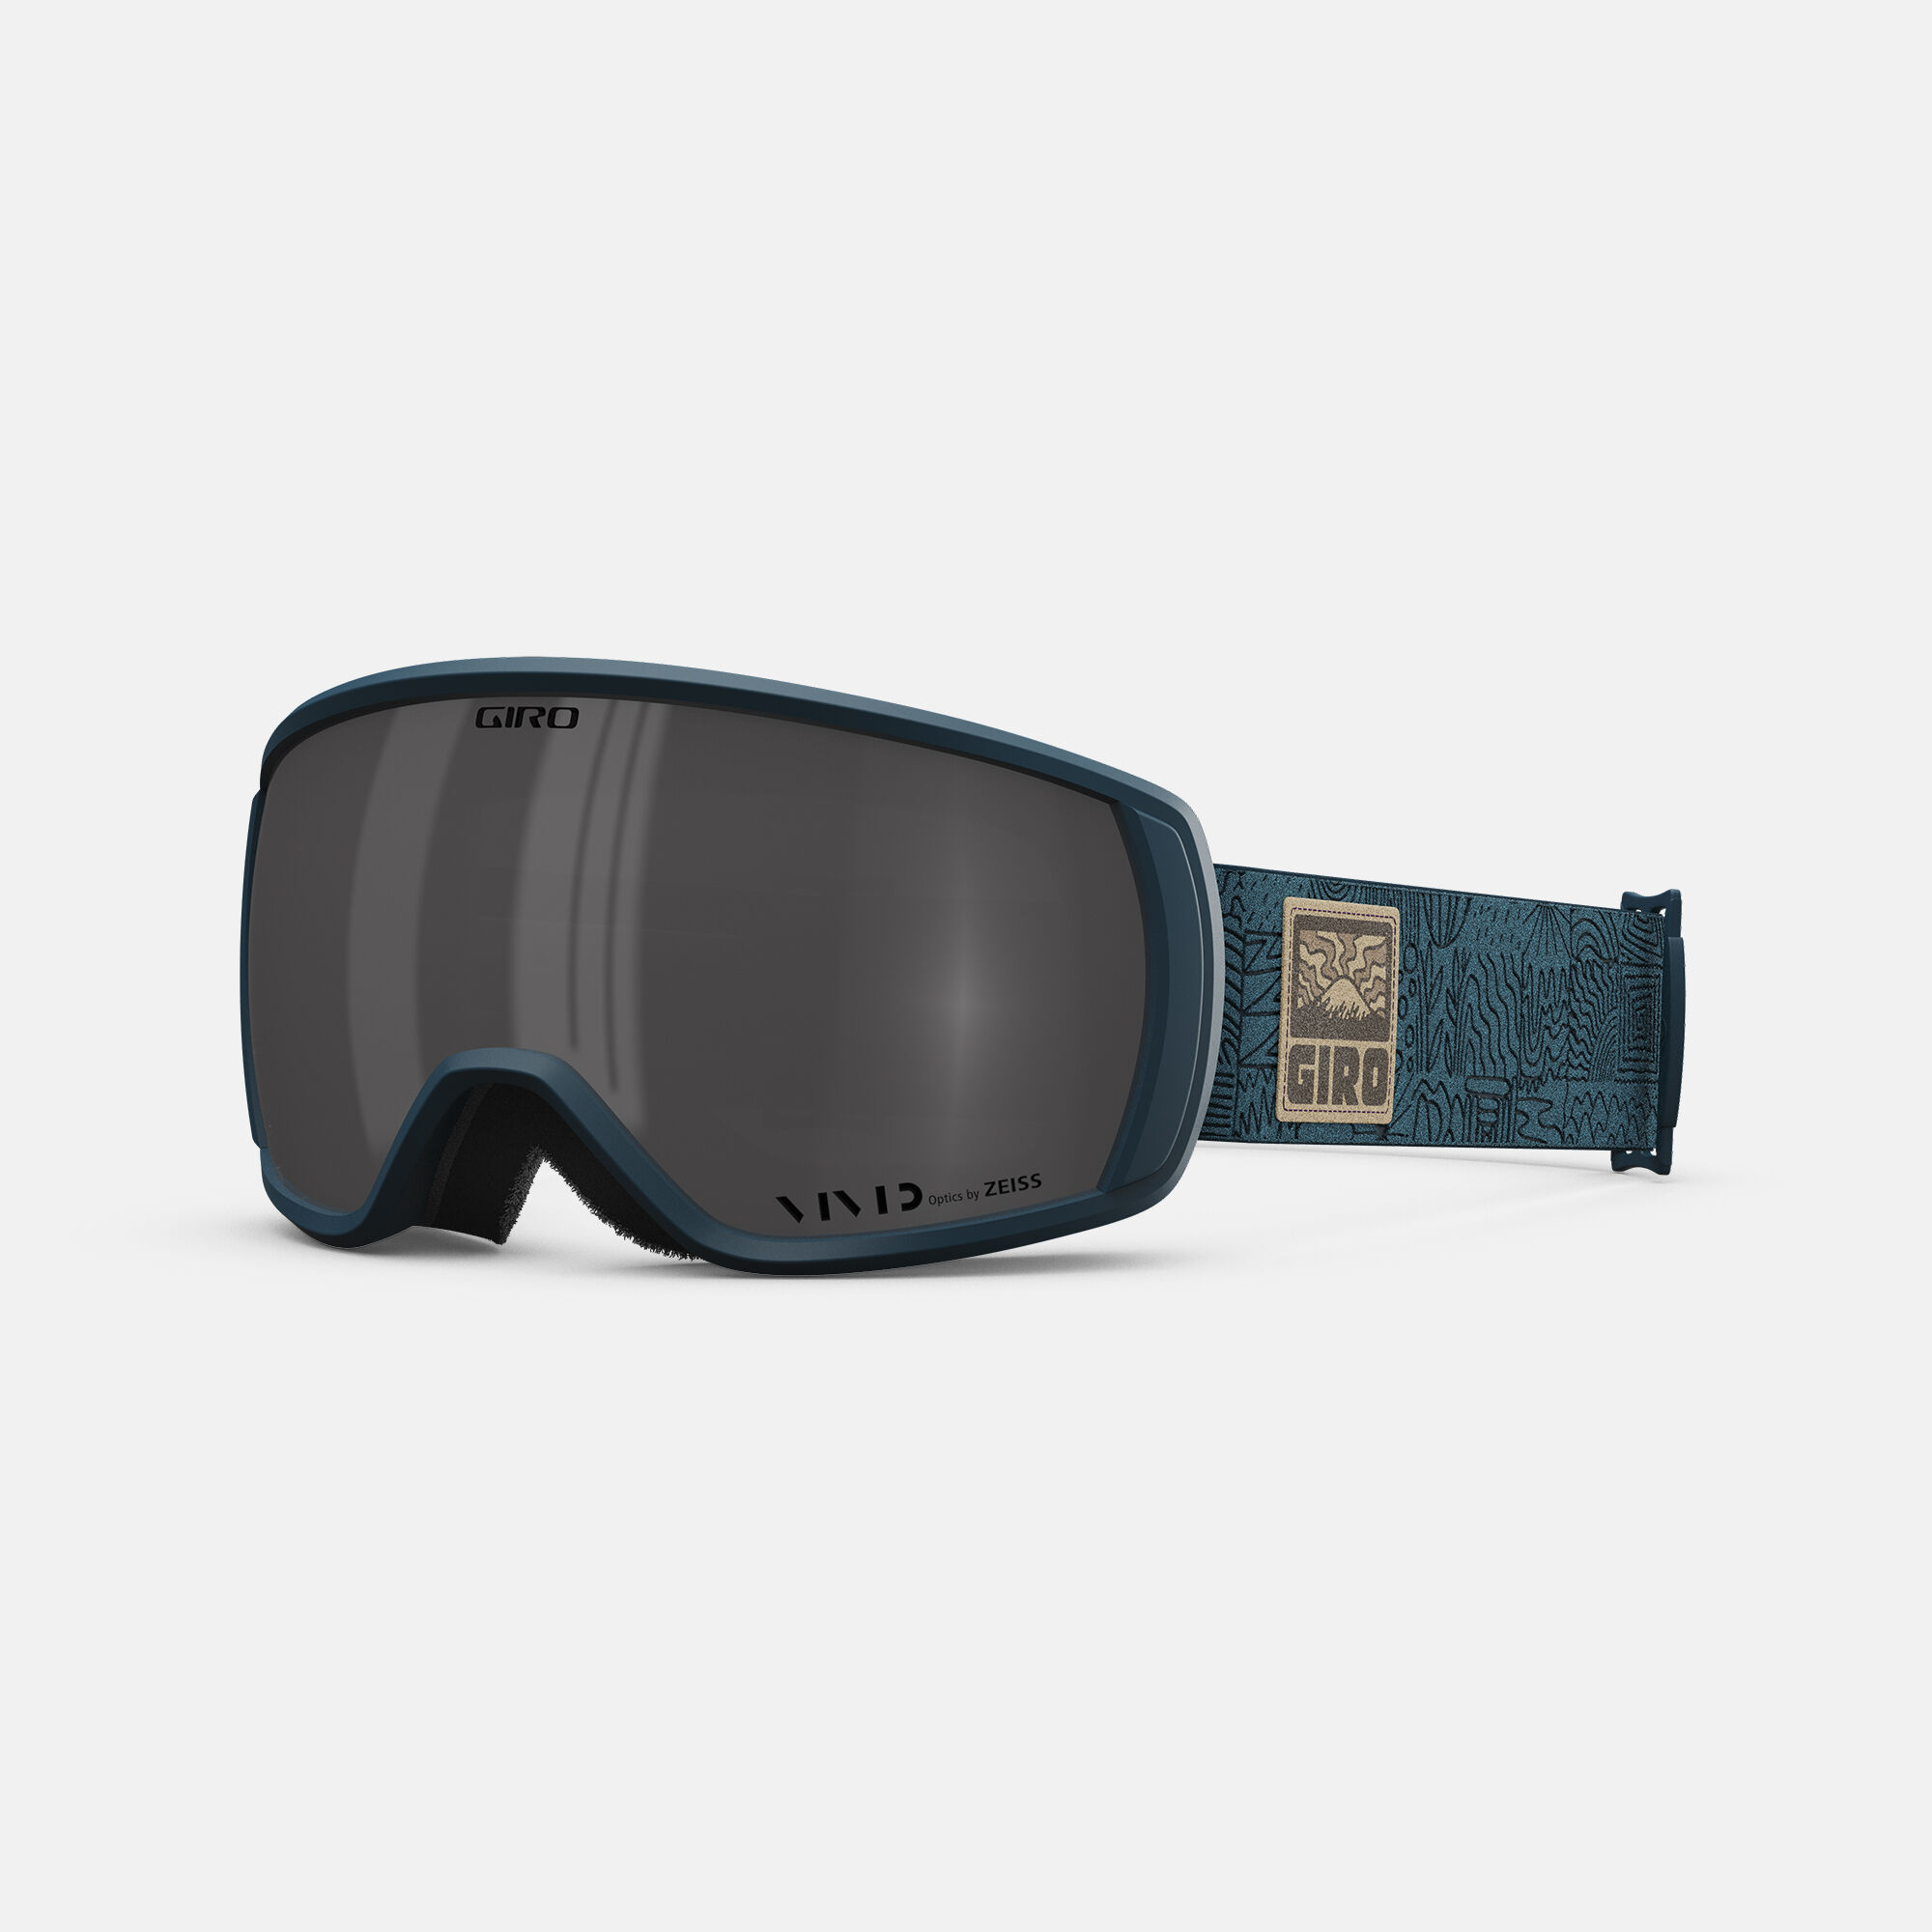 New Clic Kids Goggles Sunglasses  Magnetic Snap Together Ski Ride Bike Snow 